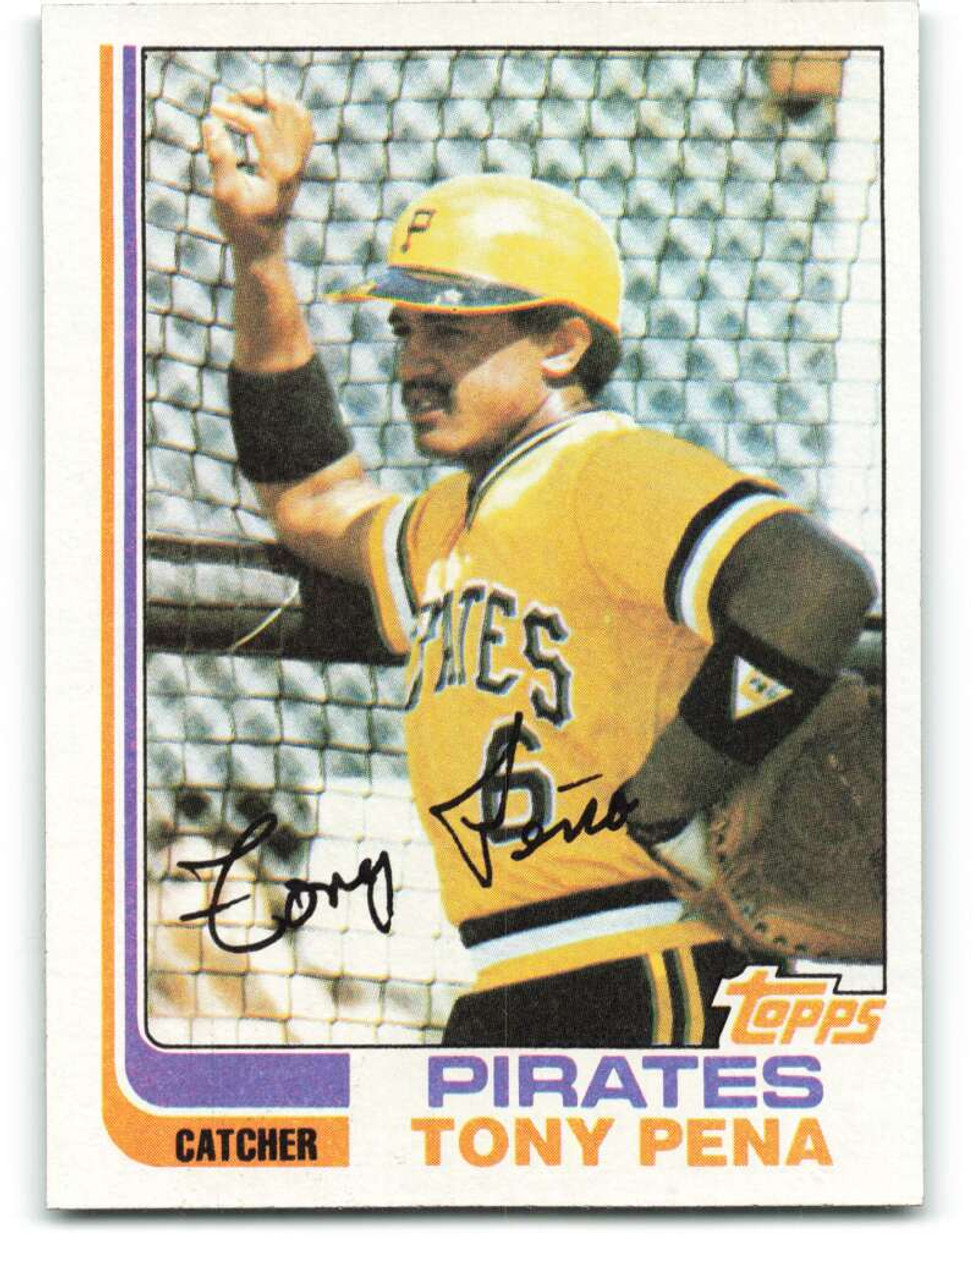  1983 Topps # 590 Tony Pena Pittsburgh Pirates